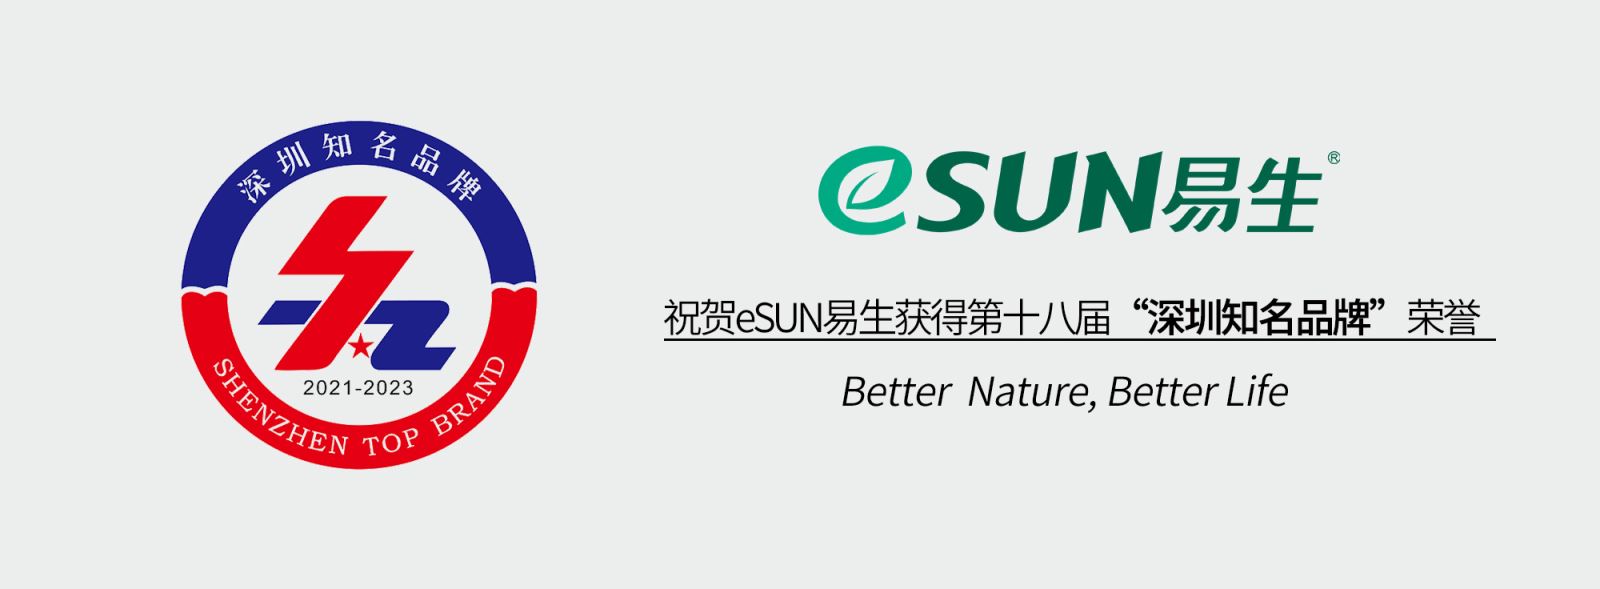 Congratulations on eSUN winning the 18th Shenzhen Top Brand!